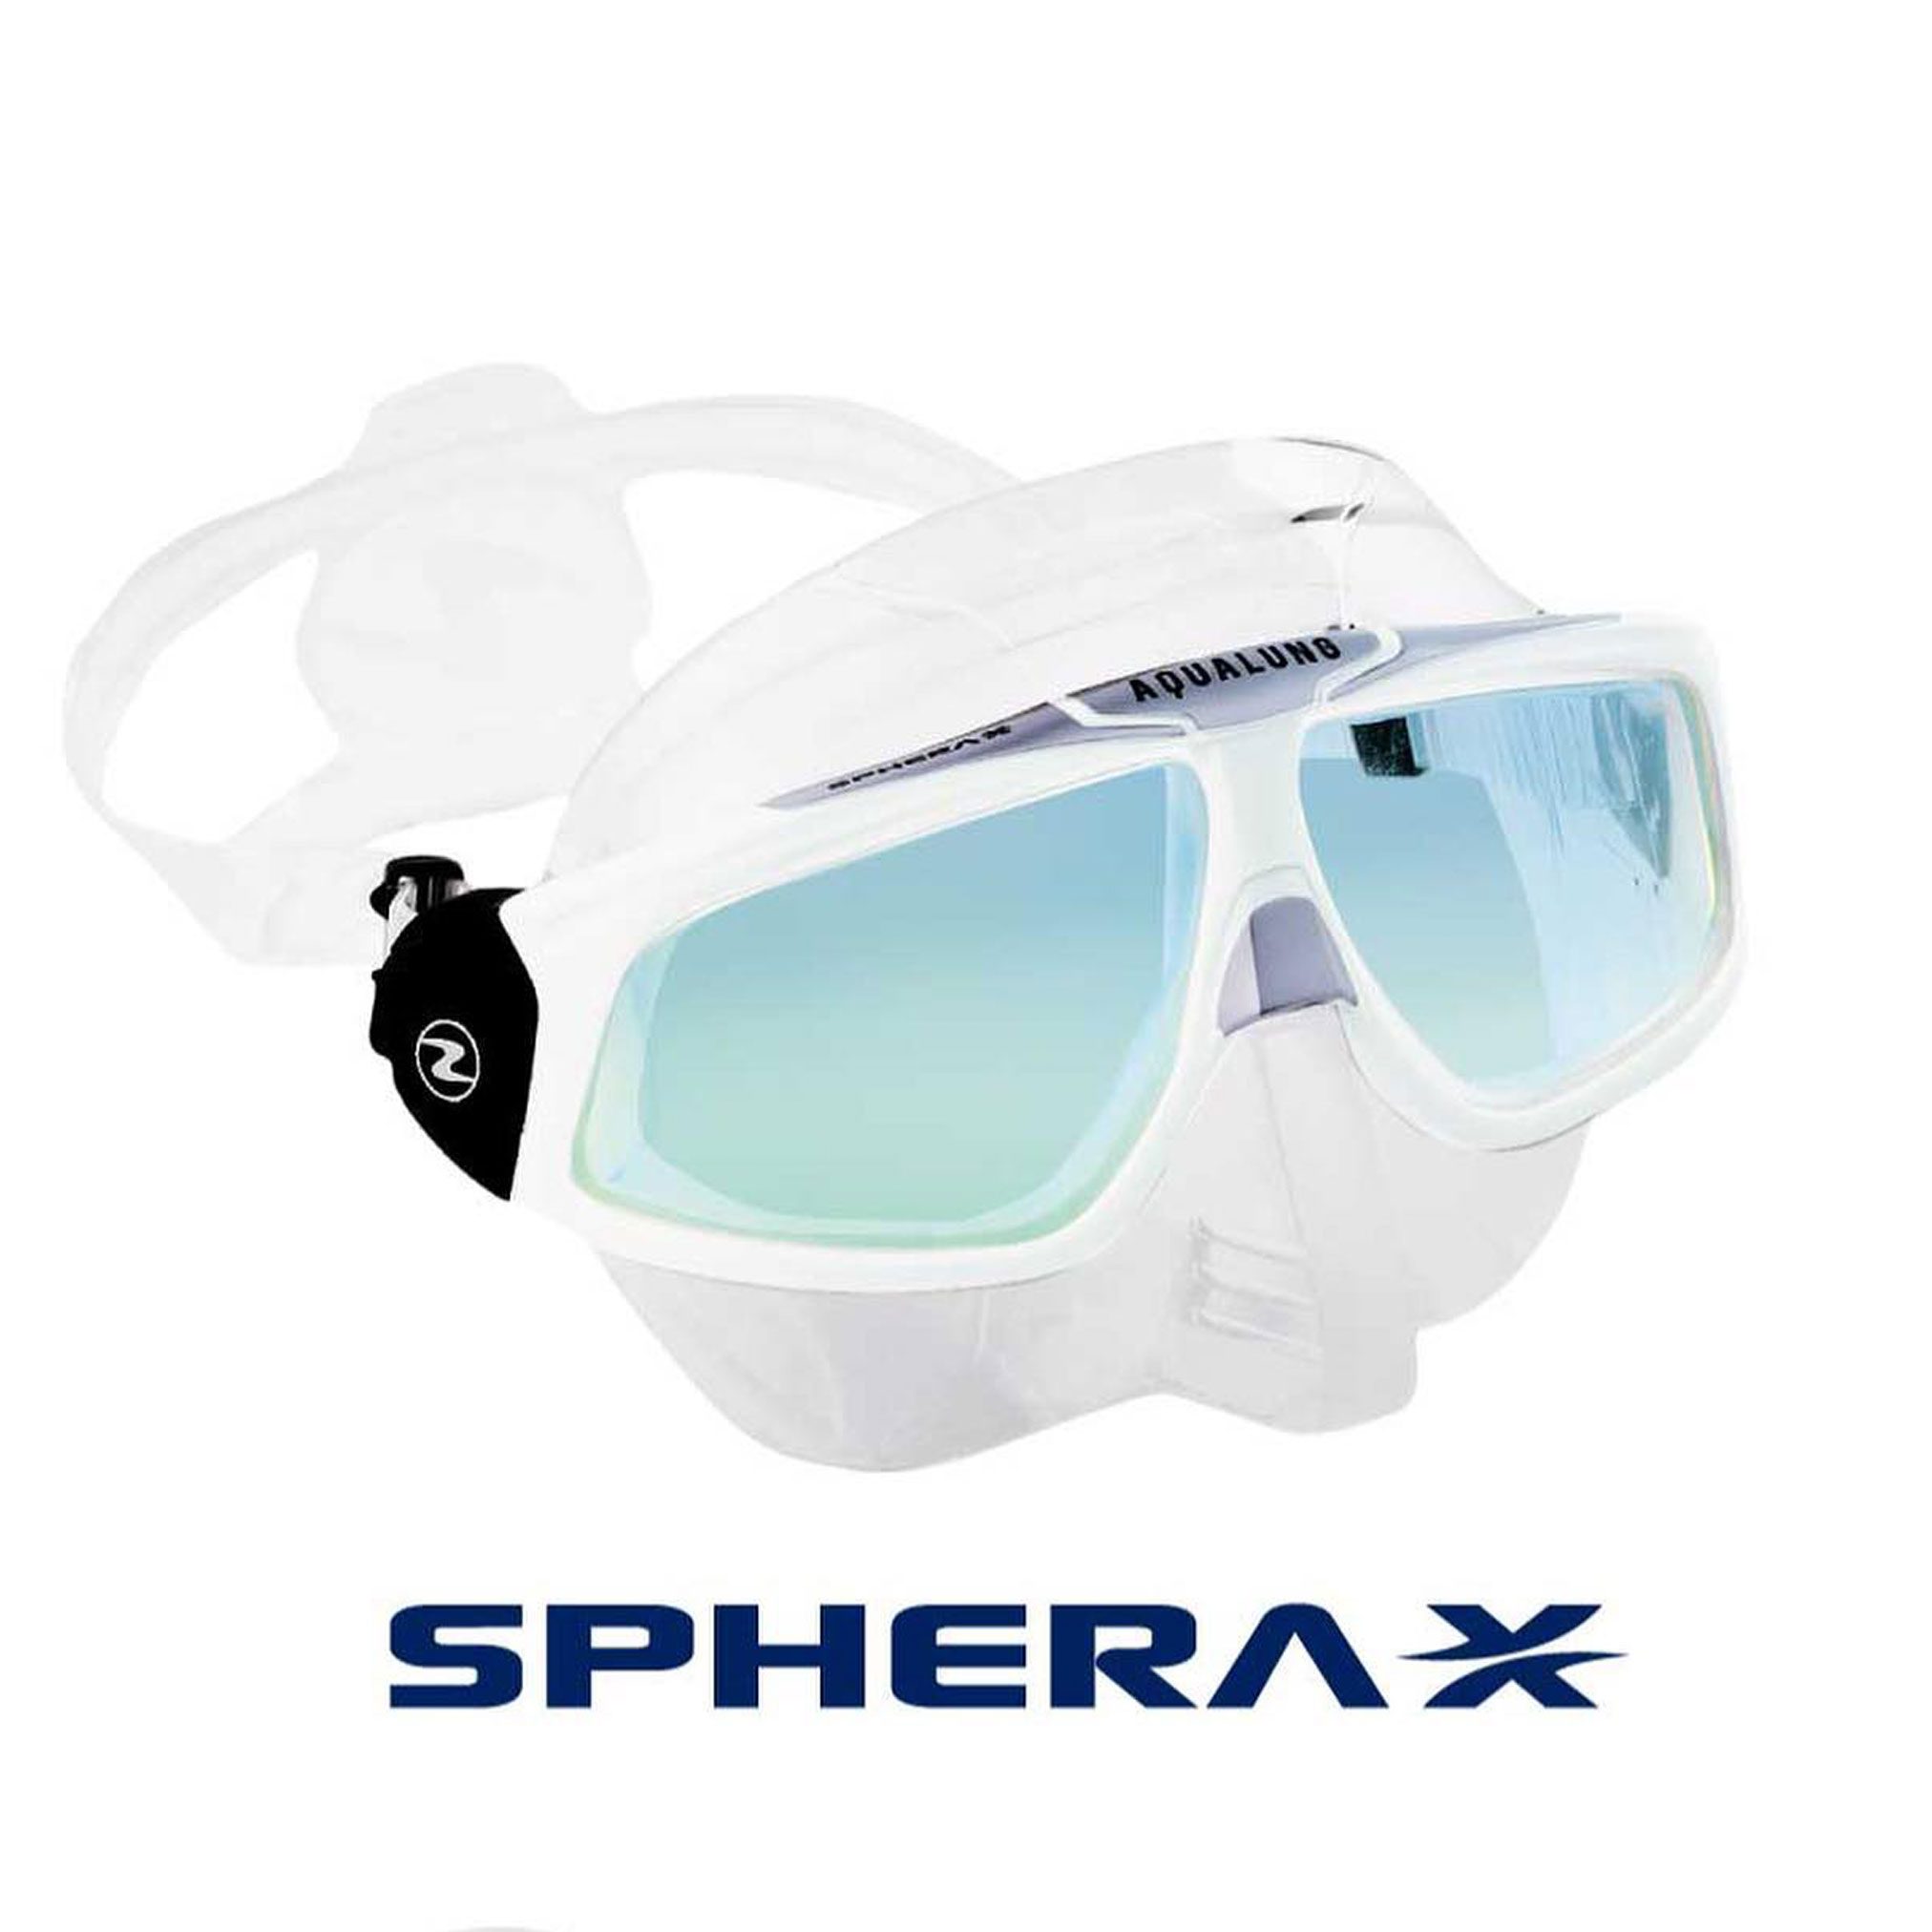 https://divegearaustralia.com.au/wp-content/uploads/2022/06/Aqualung-Sphera-X-Mask-White-Mirror-Lens.jpg